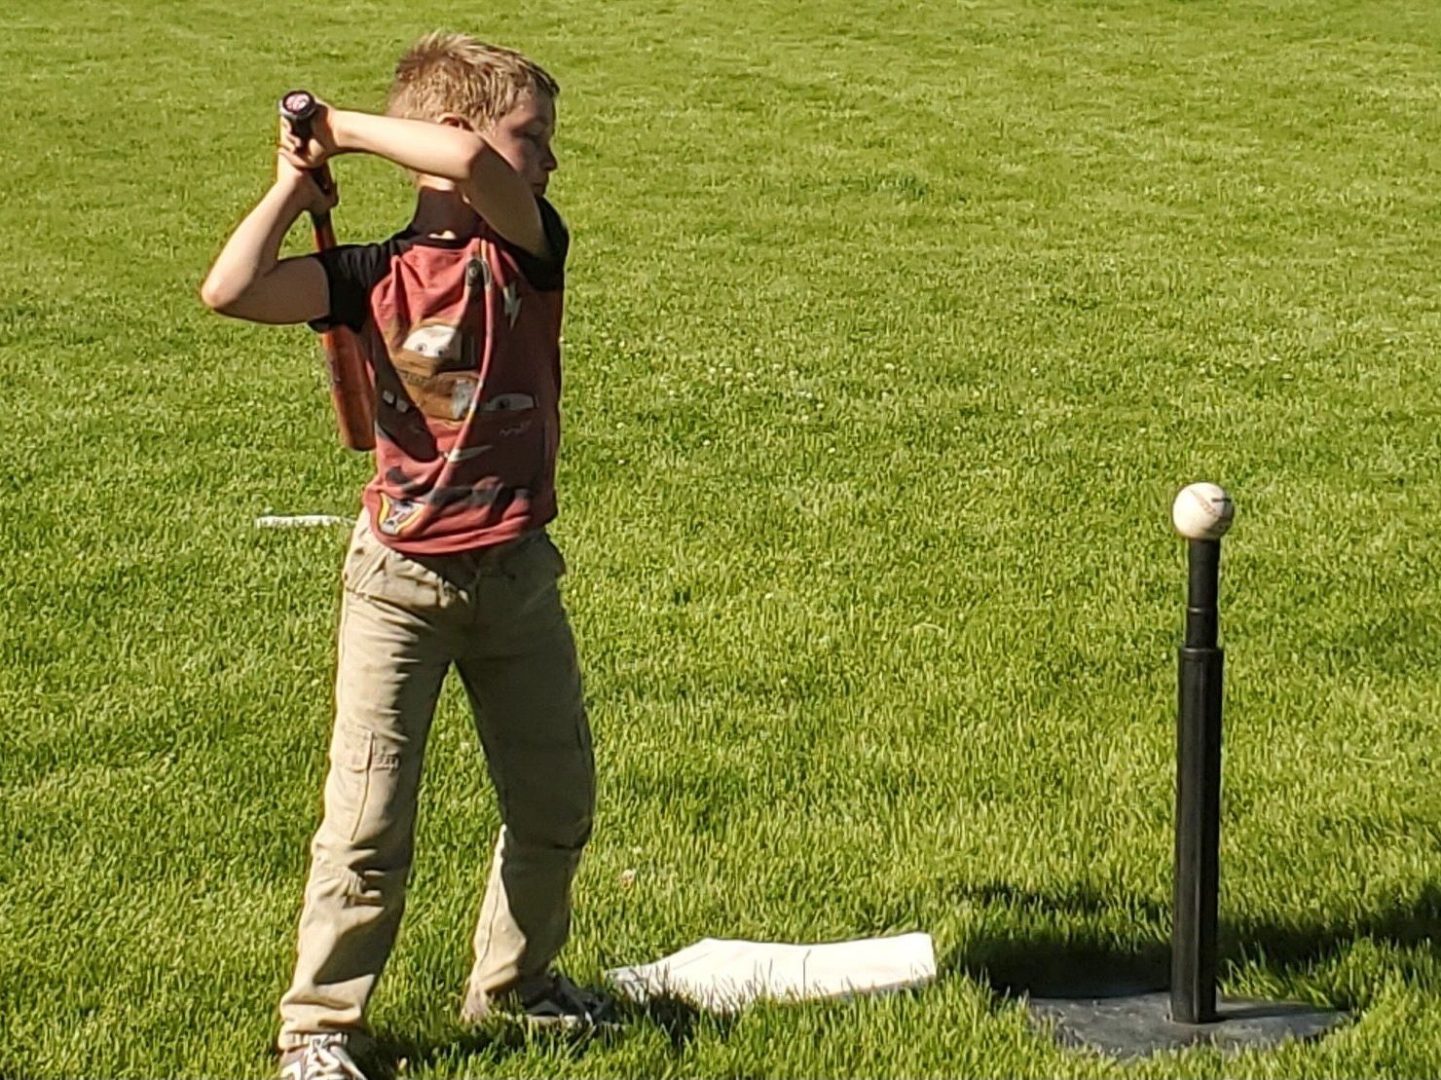 boy hitting ball, tee-ball, all kids play, youth sports nonprofit